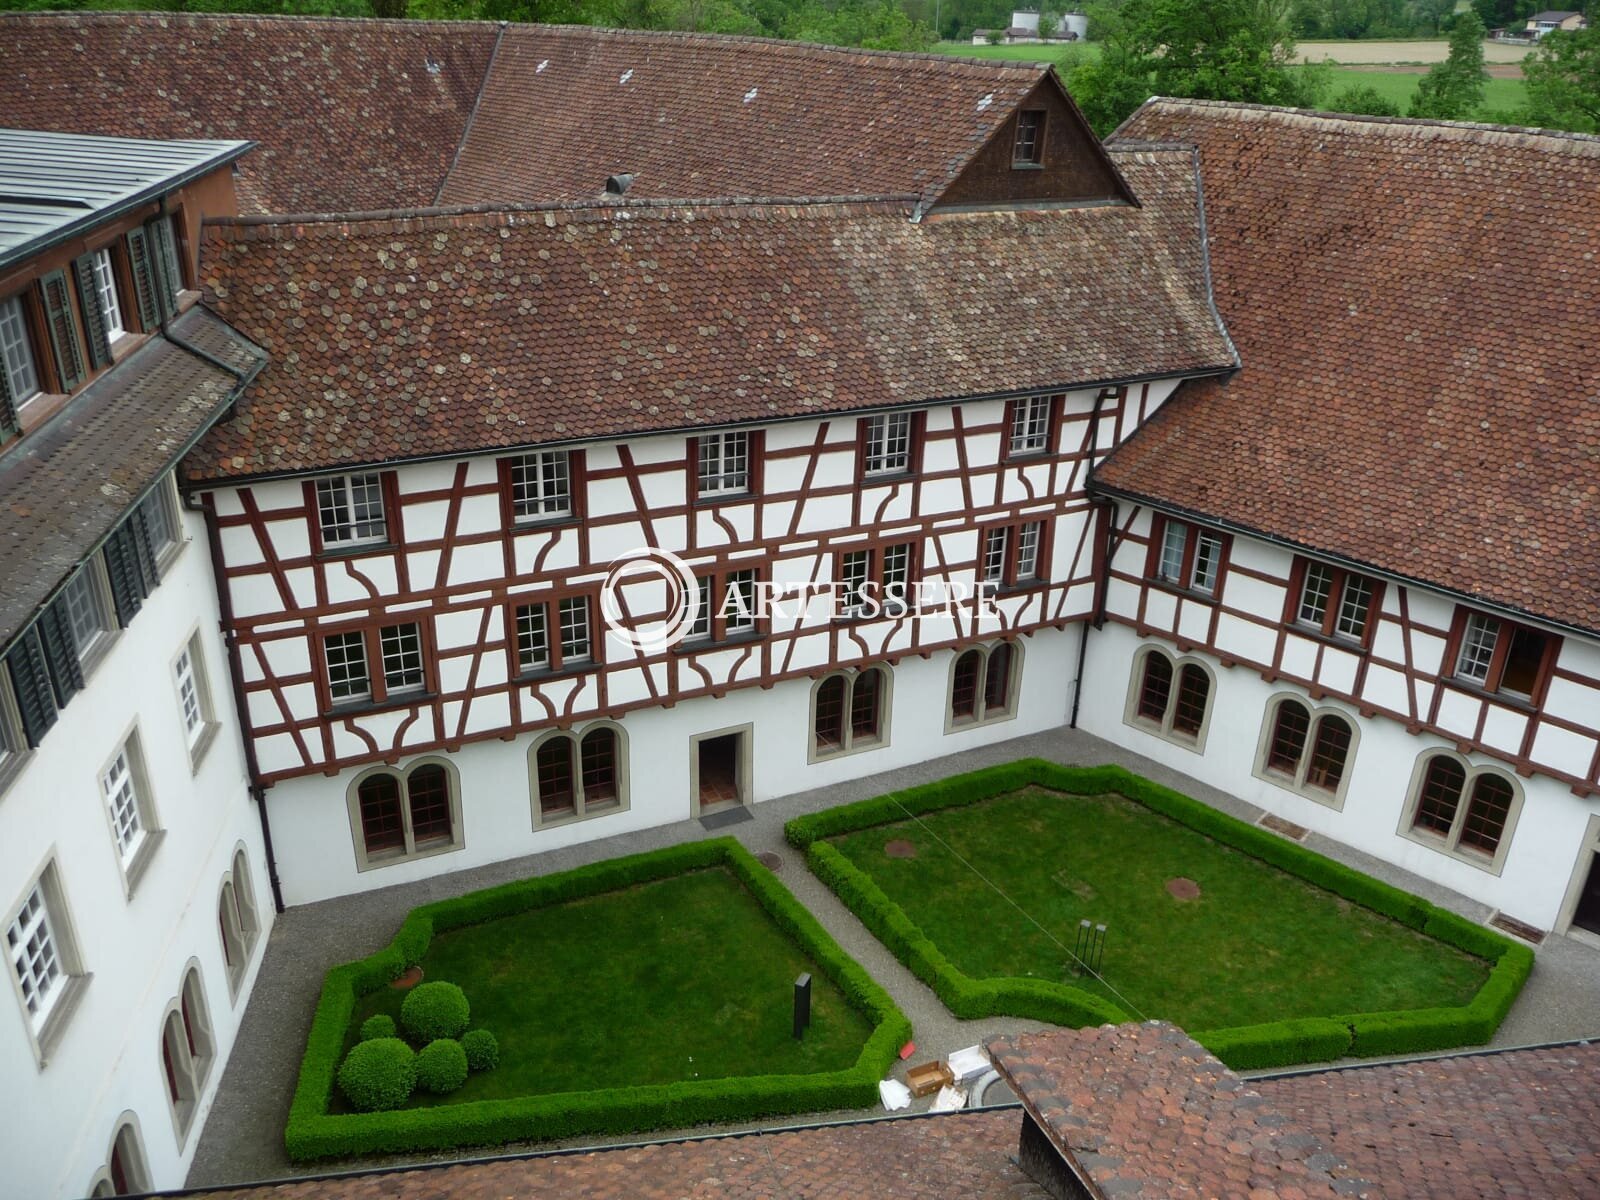 Museum Kloster Gnadenthal